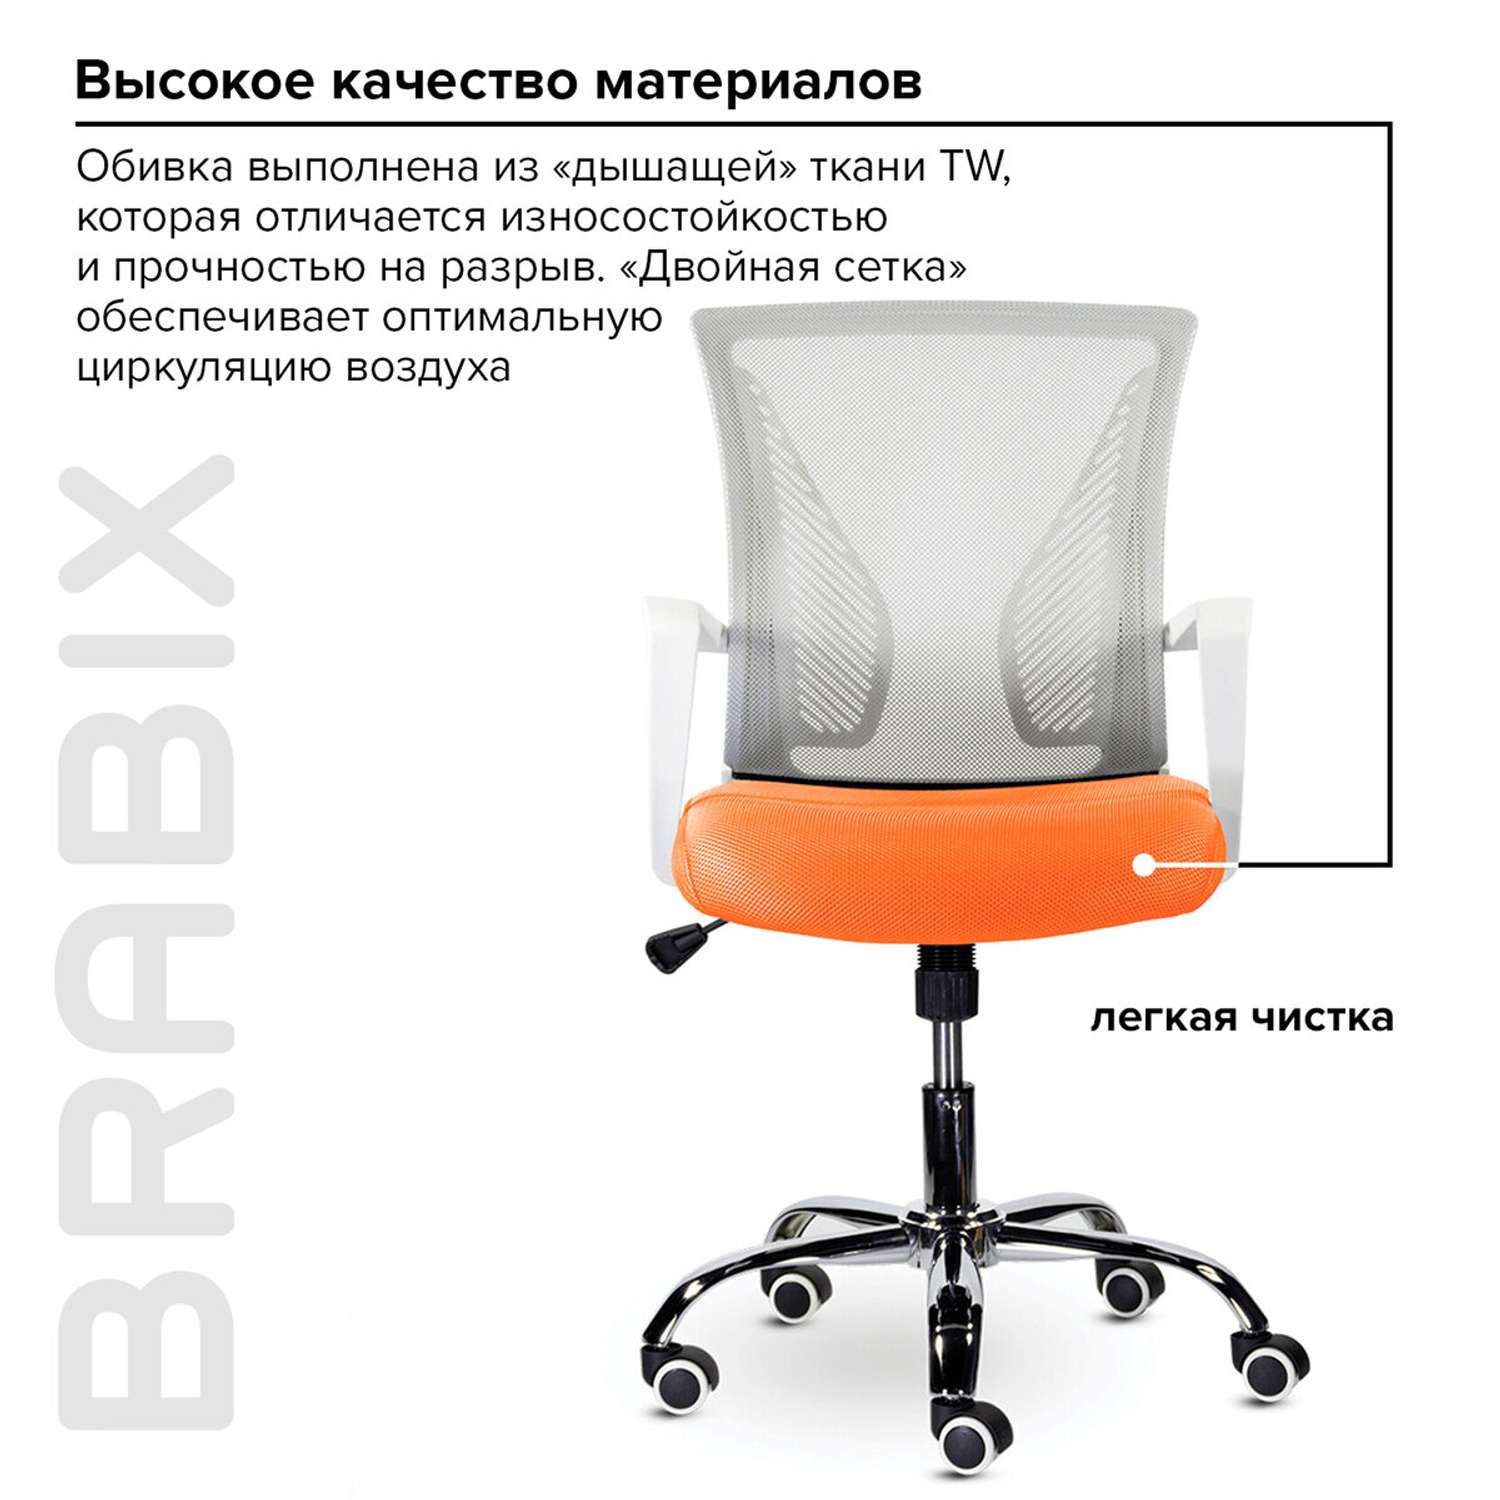 Кресло компьютерное Brabix Wings MG-306 хром сетка cерое/оранжевое E-105 - фото 2